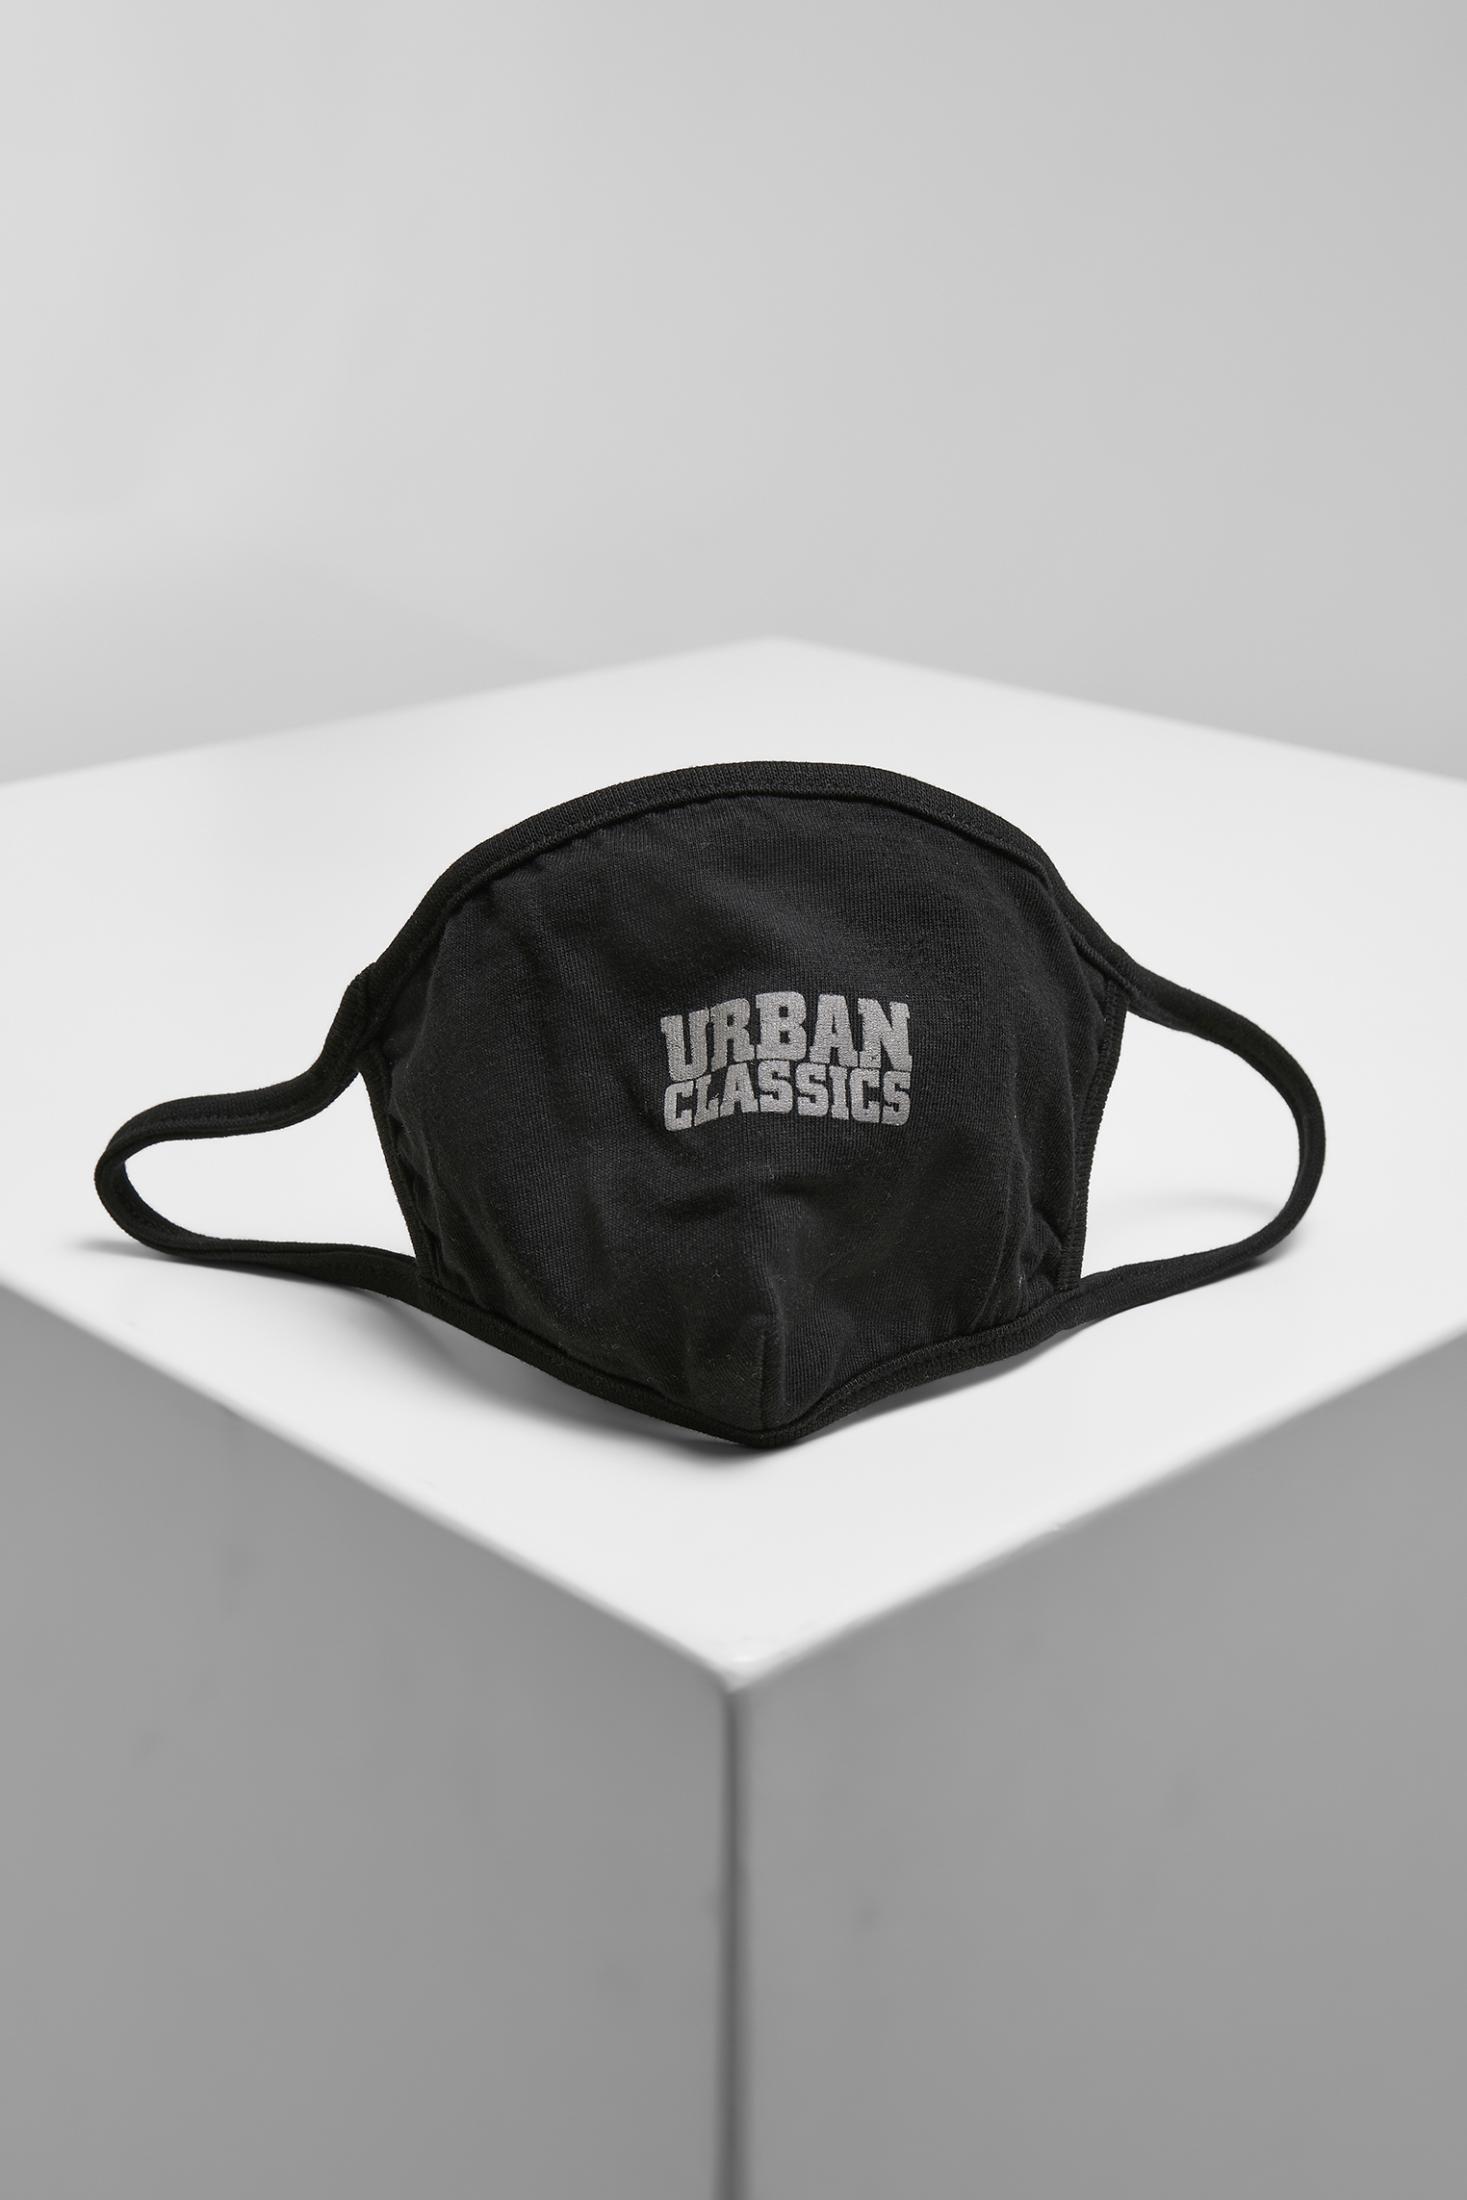 Masken Urban Classics Cotton Face Mask 2-Pack in Farbe black/white+black/grey